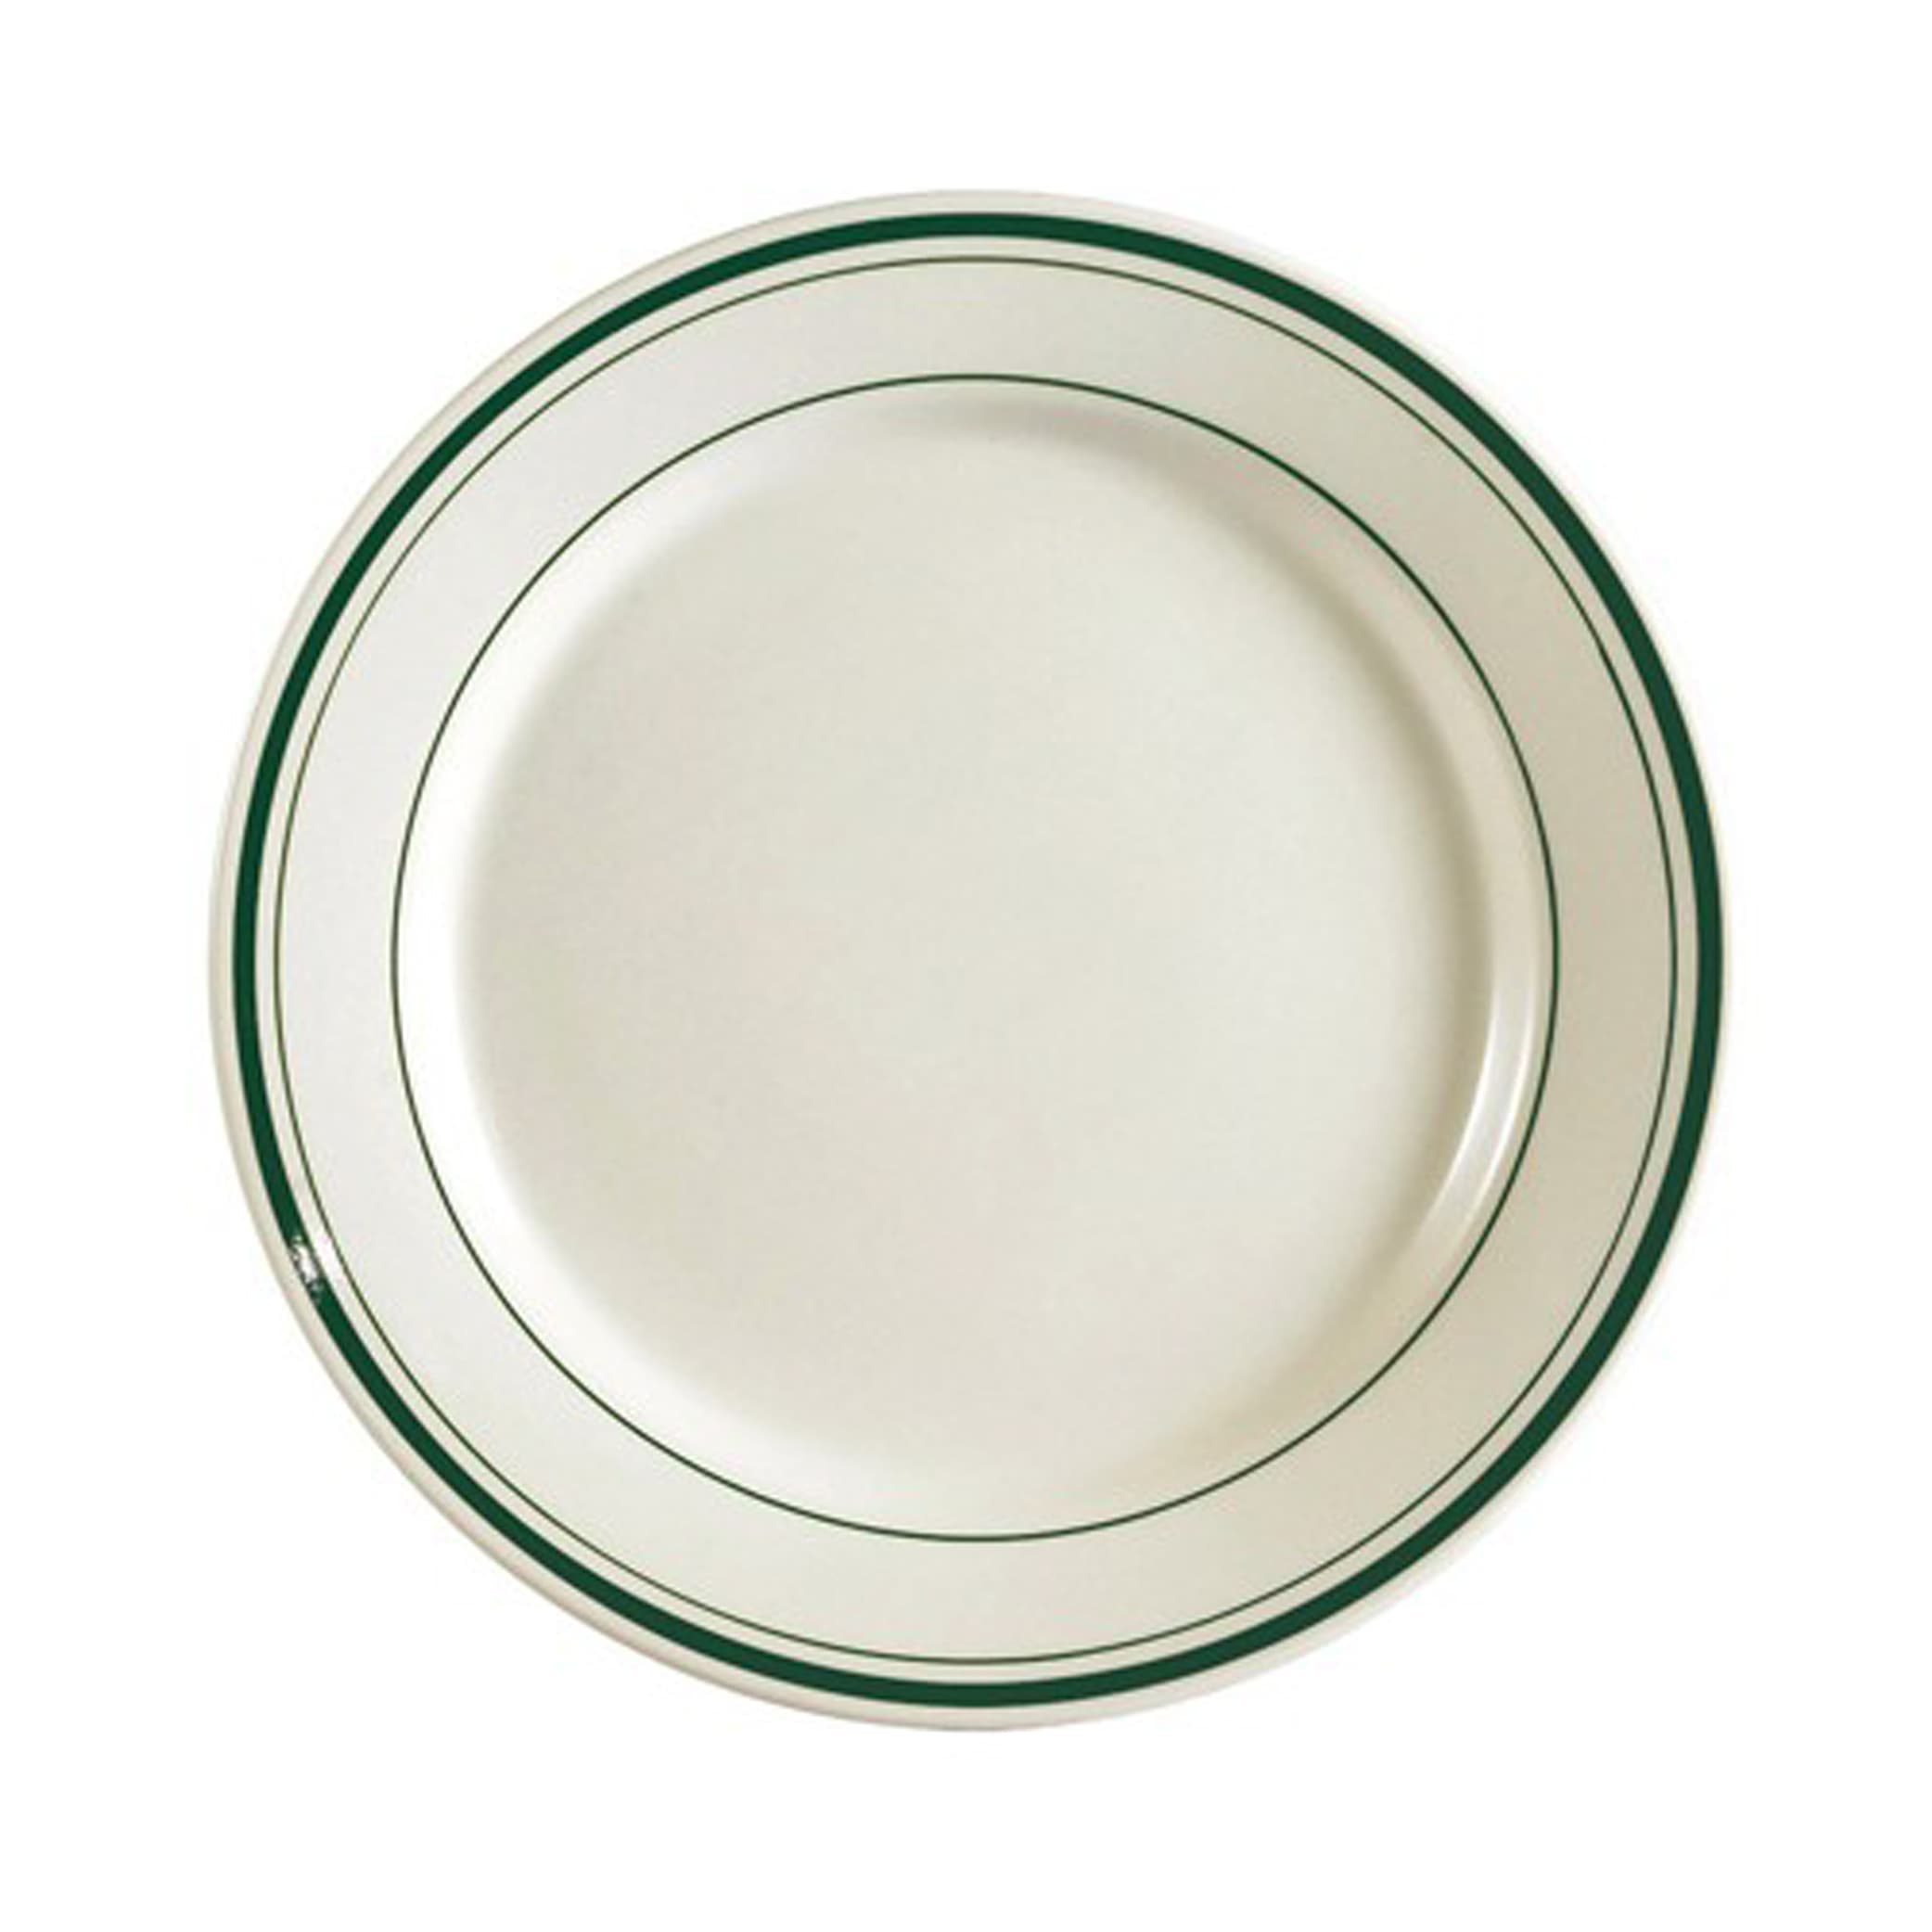 Round plate. Динер Винер тарелка. Round Plate 1×1 4073. American Plate.